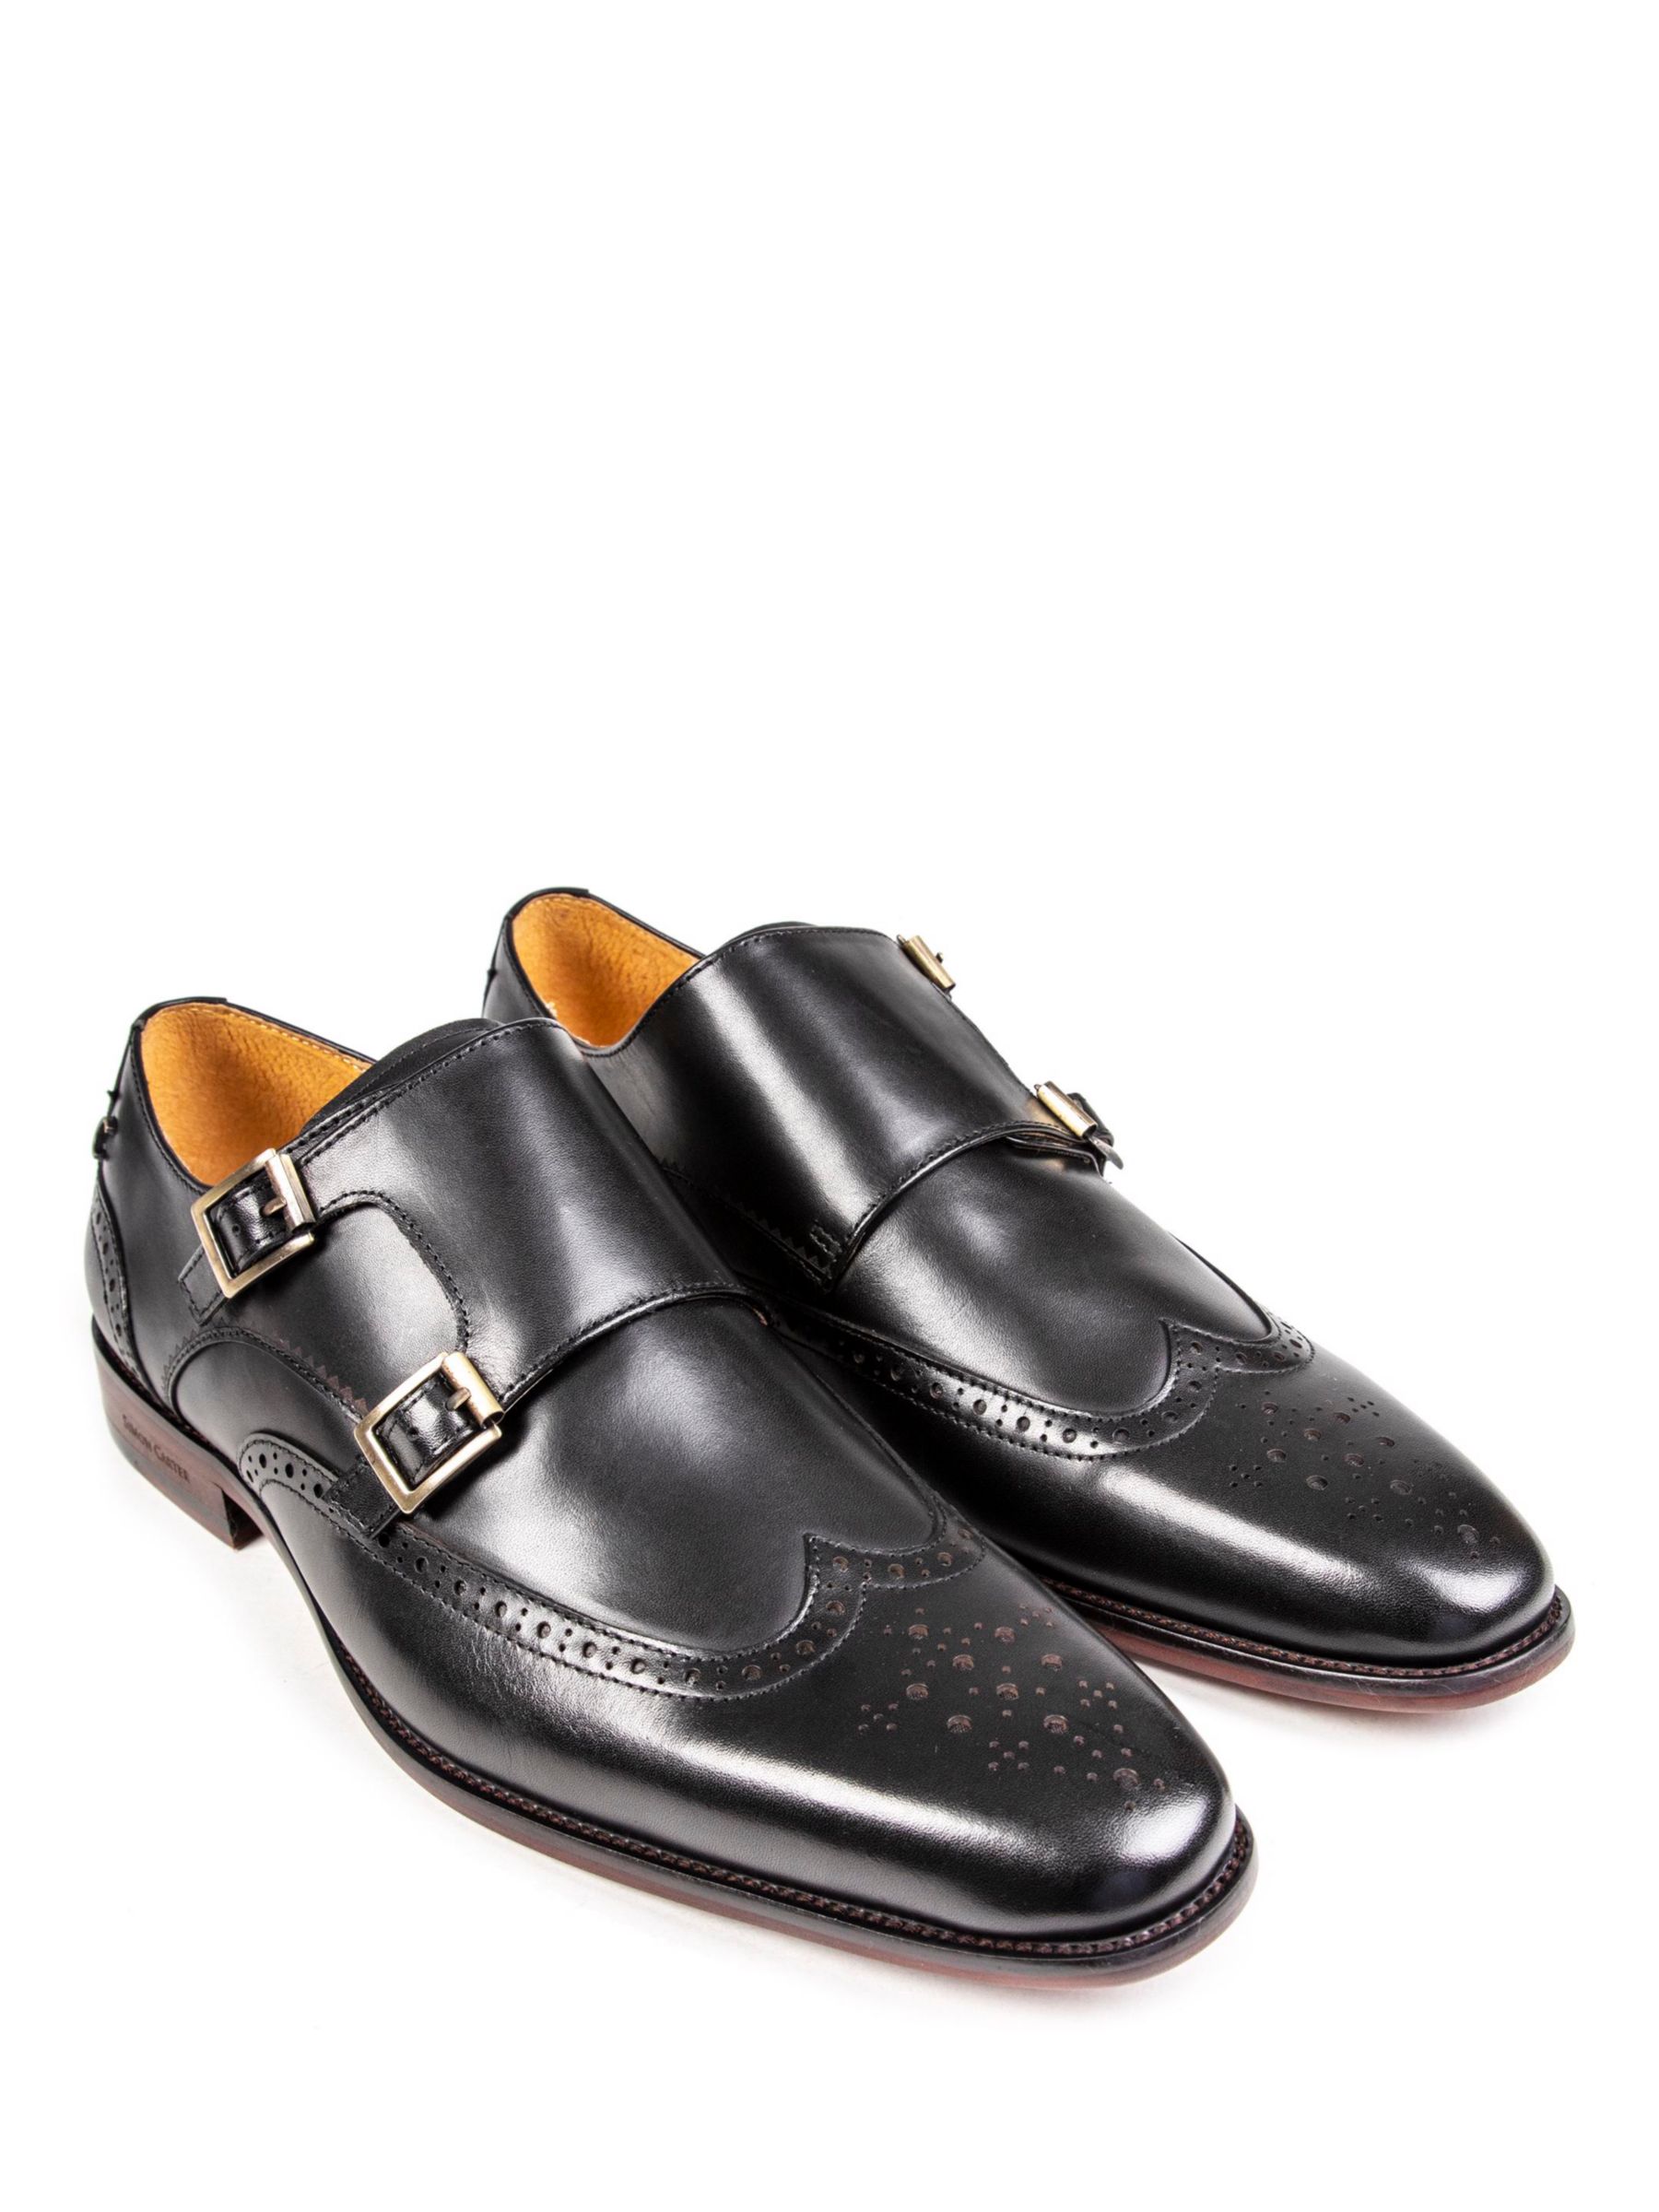 Simon Carter Spaniel Monk Shoes, Black, 10